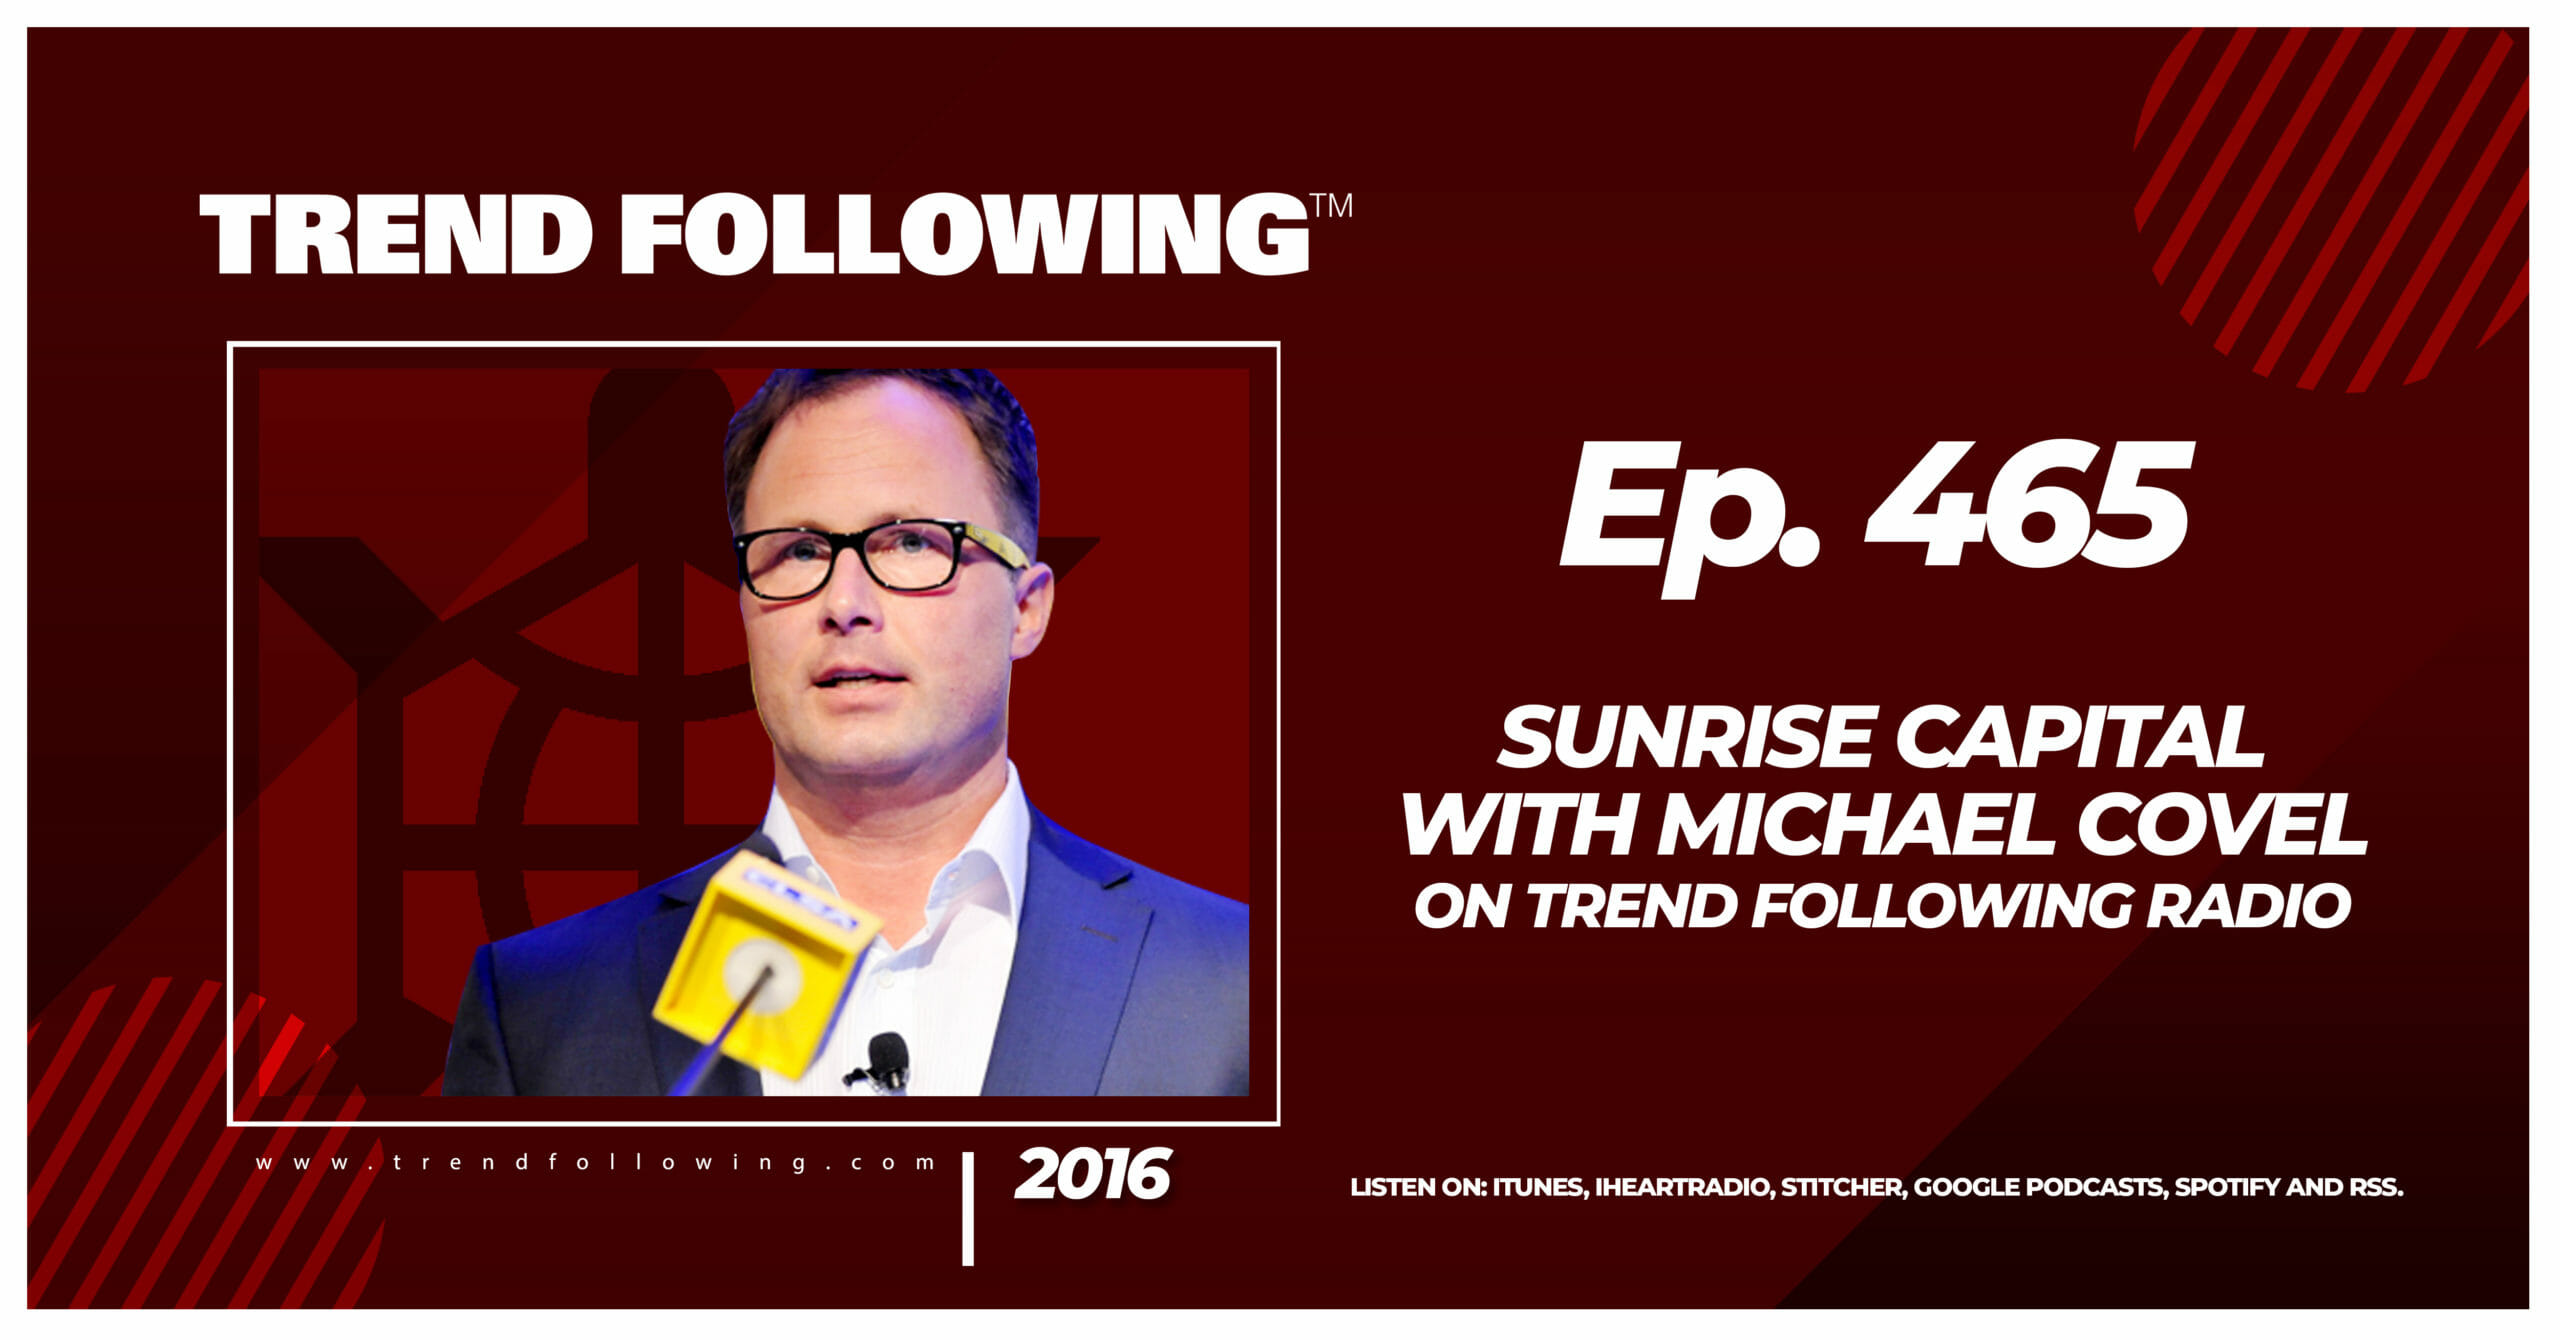 Sunrise Capital with Michael Covel on Trend Following Radio